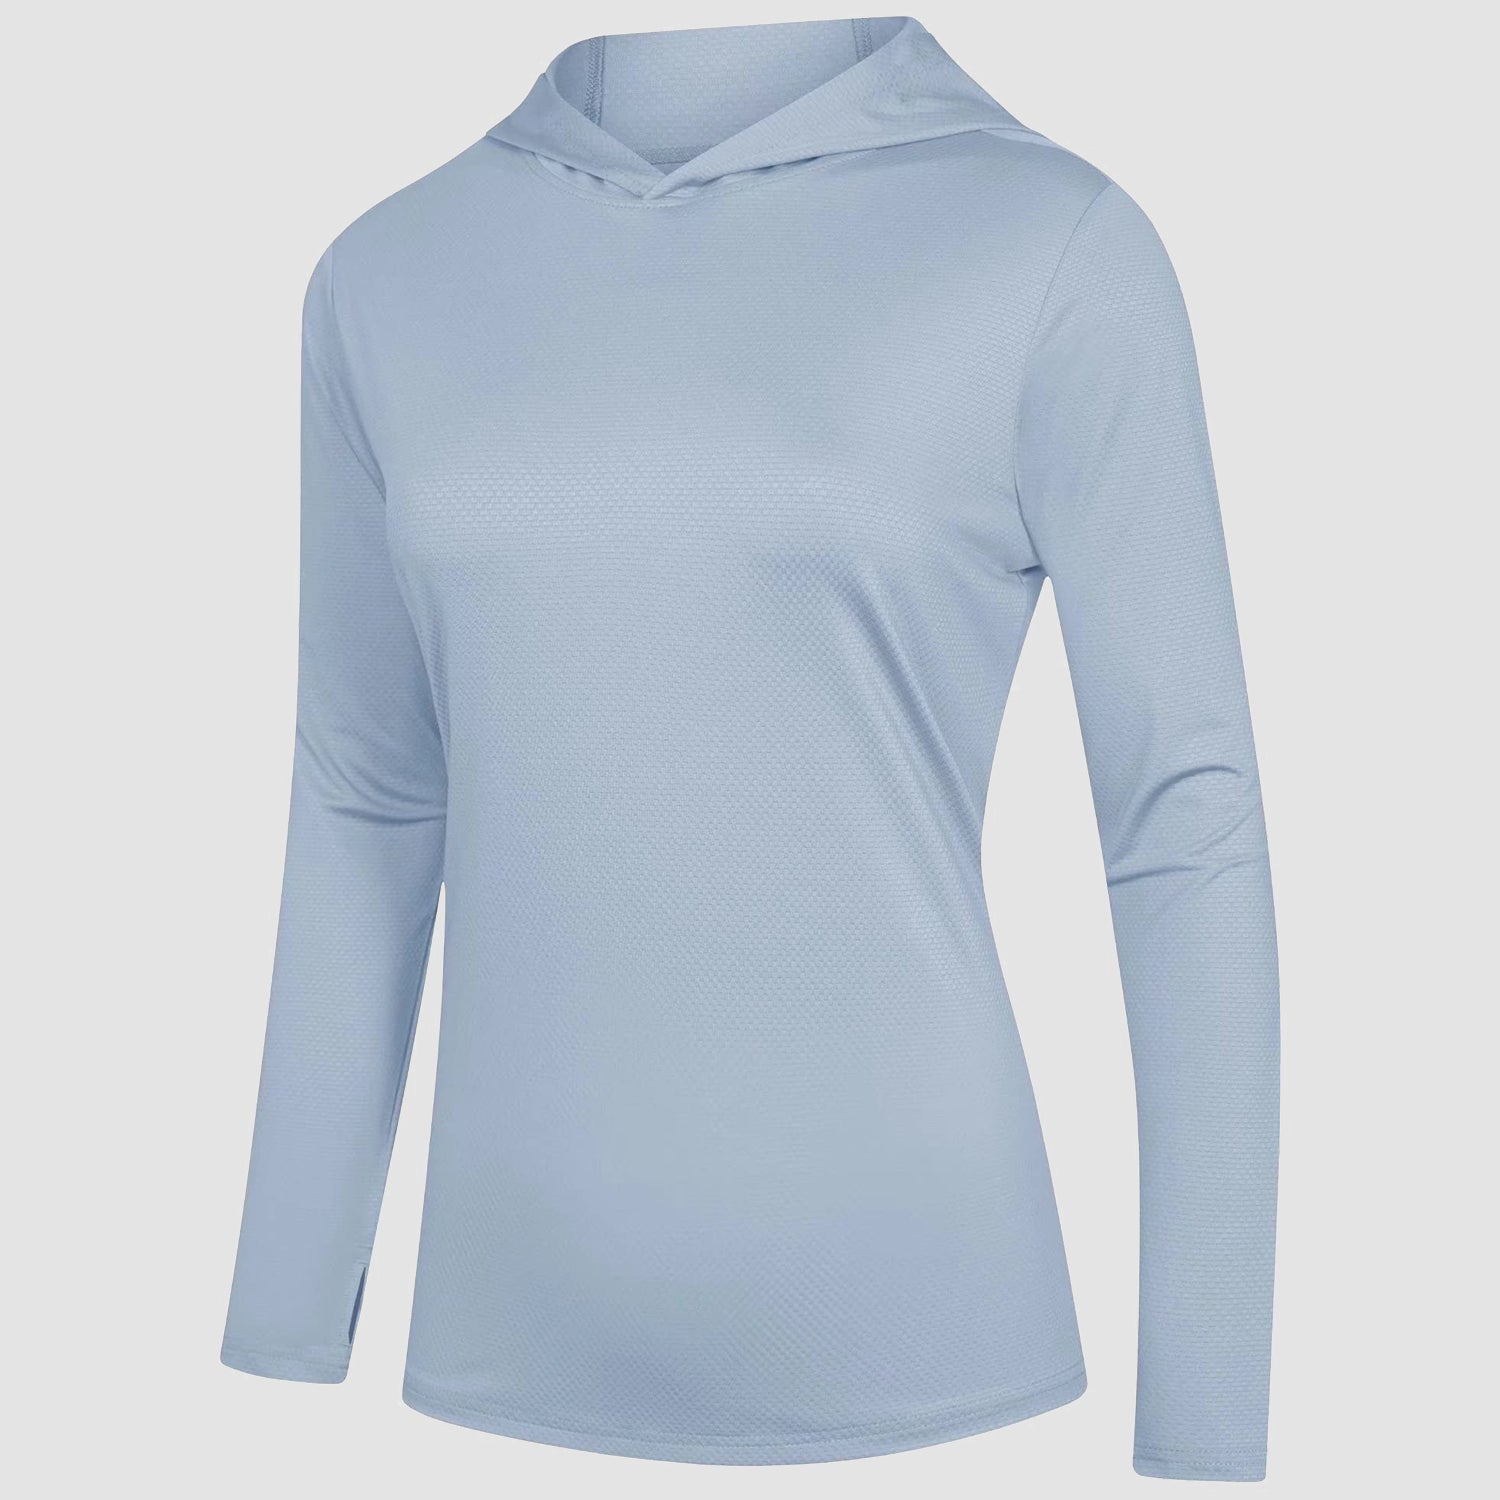 Women's Hoodie Shirts UPF 50+ Sun Protection Long Sleeve UV Shirt Fishing Hiking Athletic Shirts with Thumb Hole, Pale Blue / XL